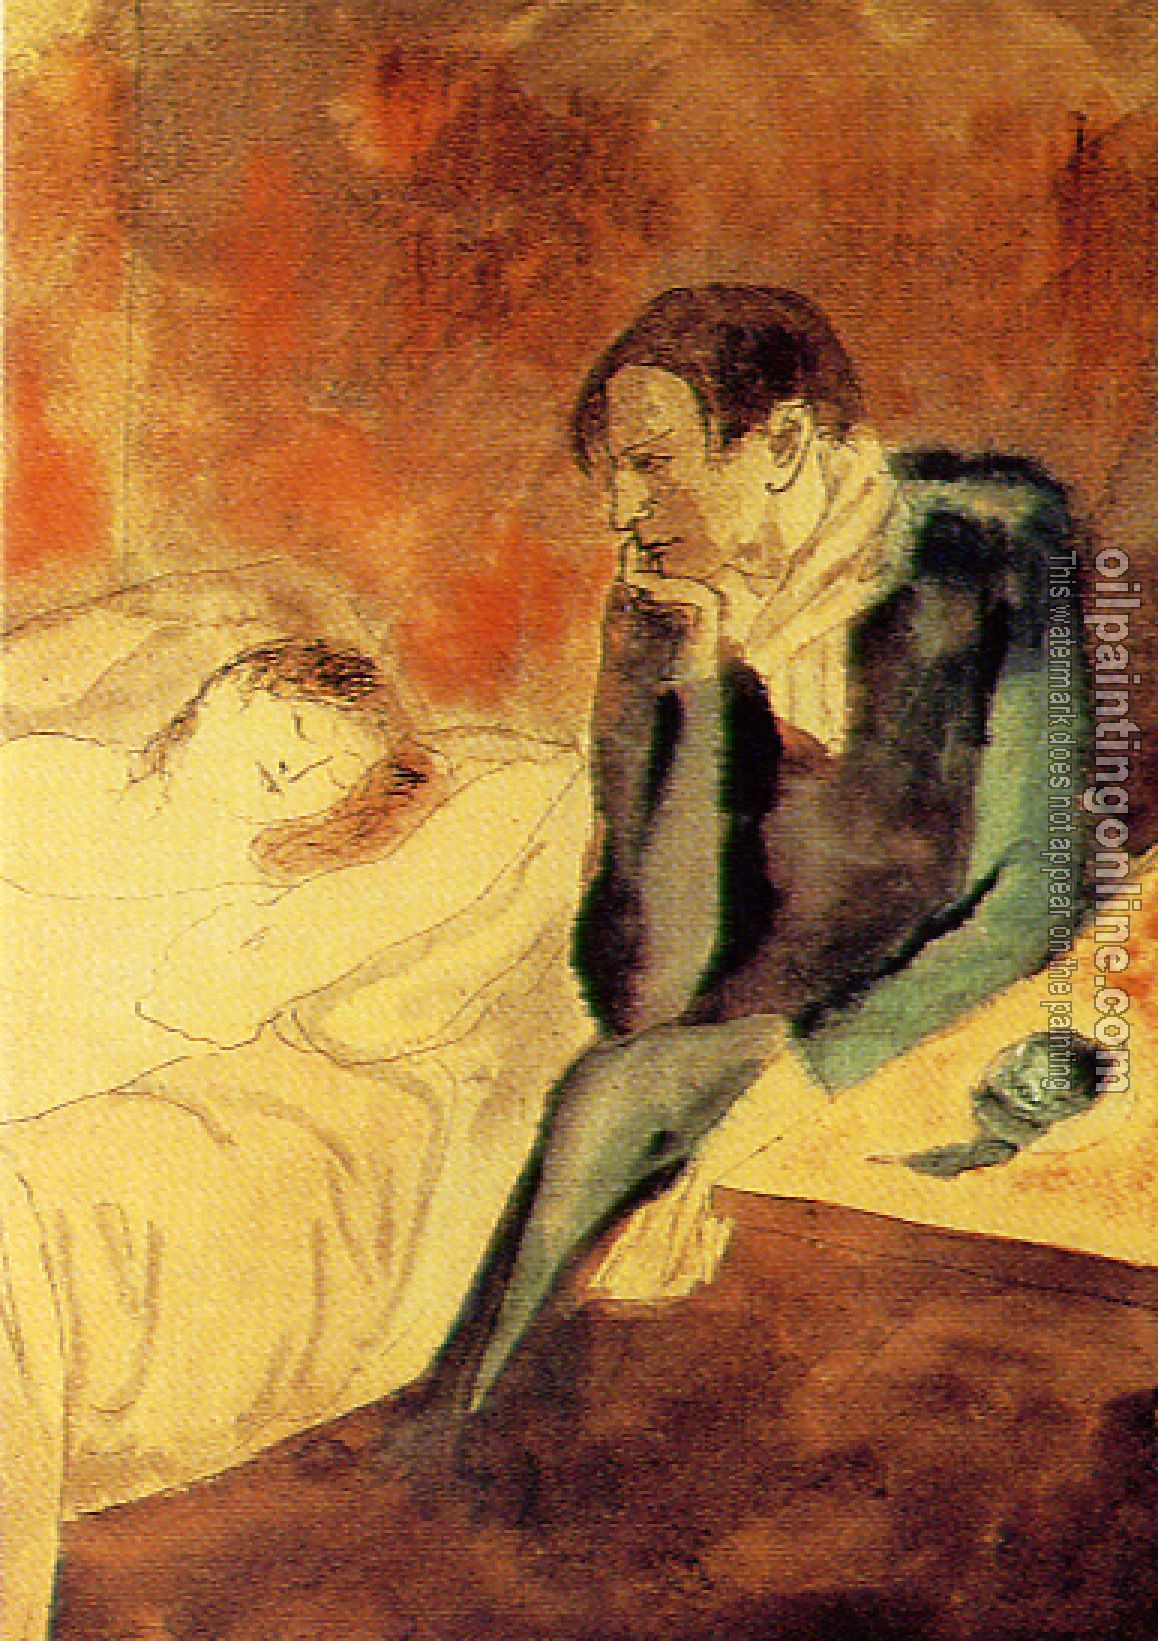 Picasso, Pablo - sleeping woman